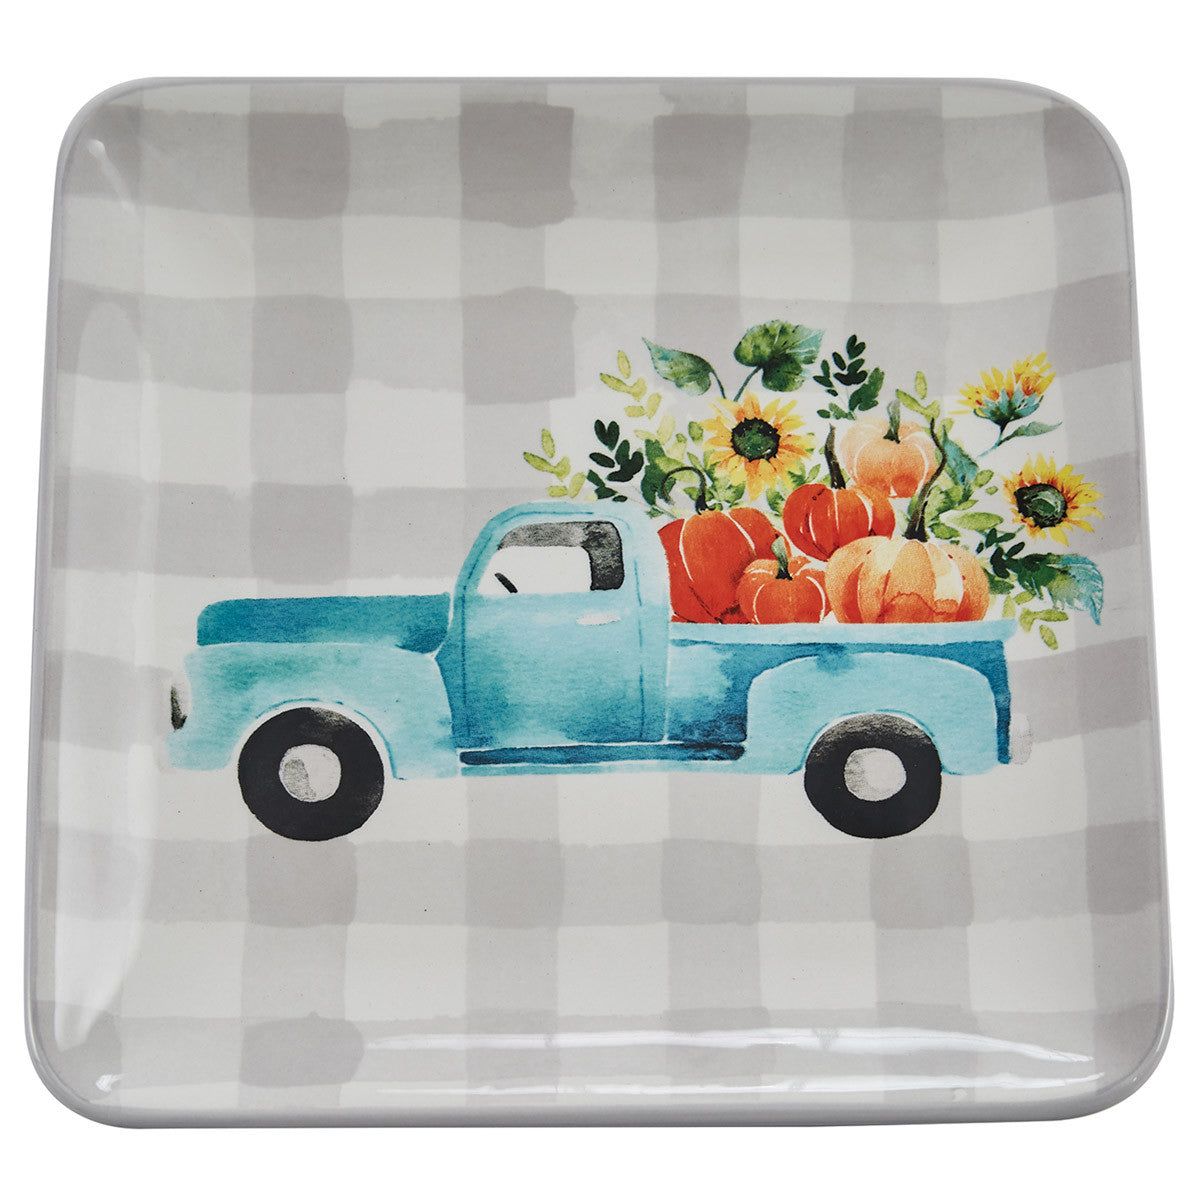 Truck Loads Of Fun Salad Plate - Set of 2 Park Designs